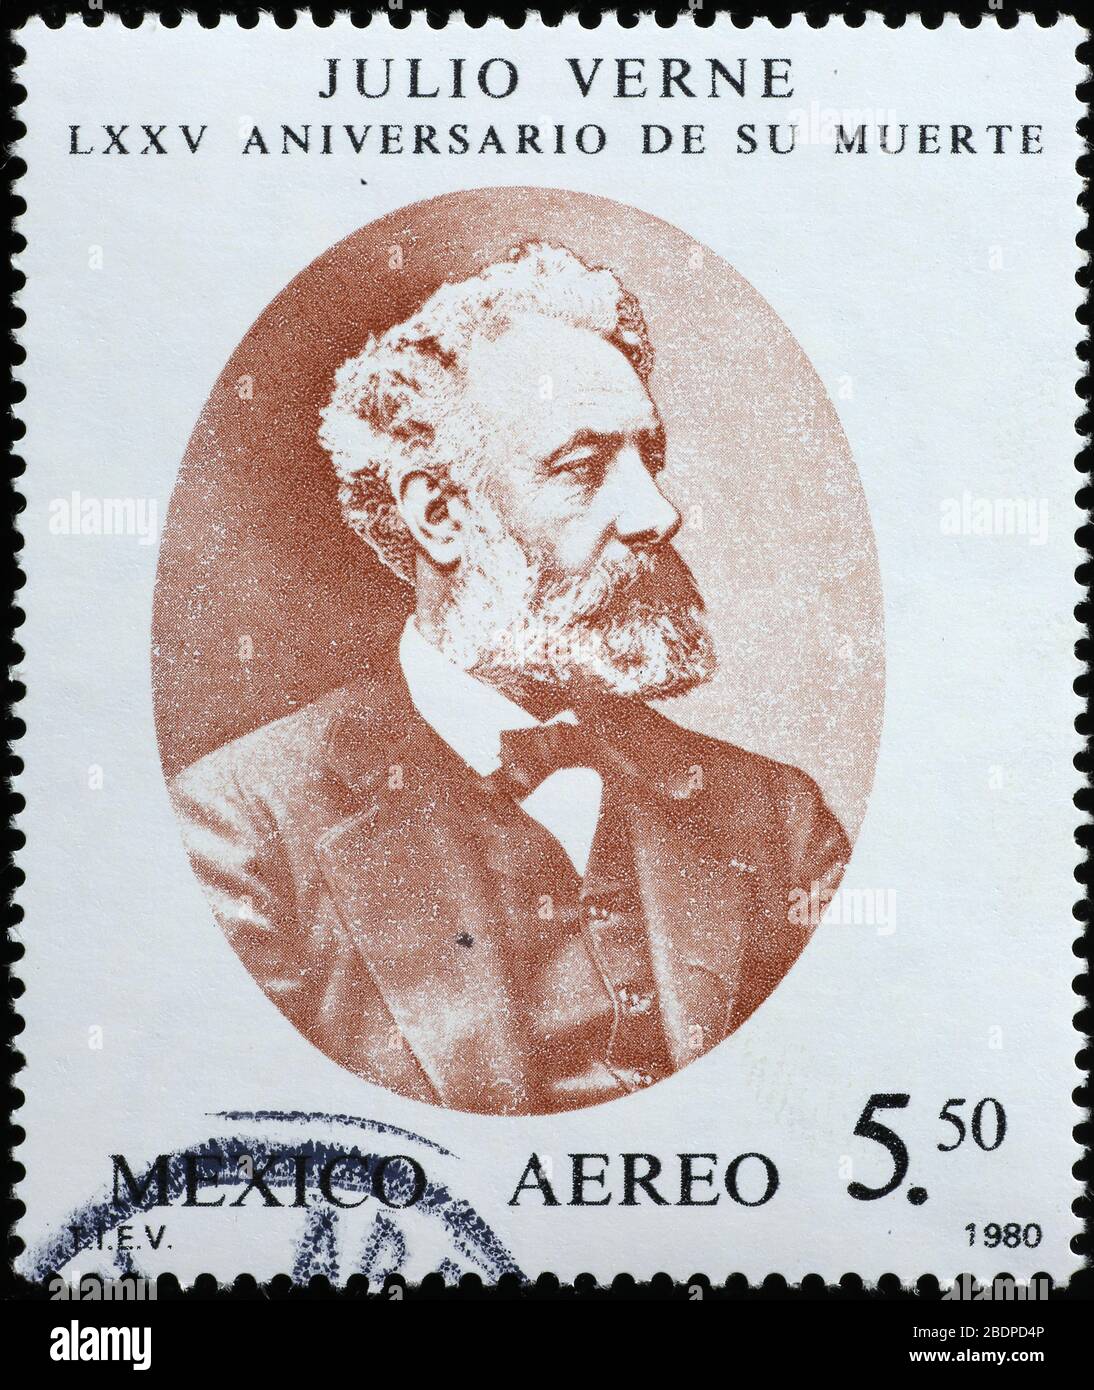 Jules Verne on postage stamp Stock Photo